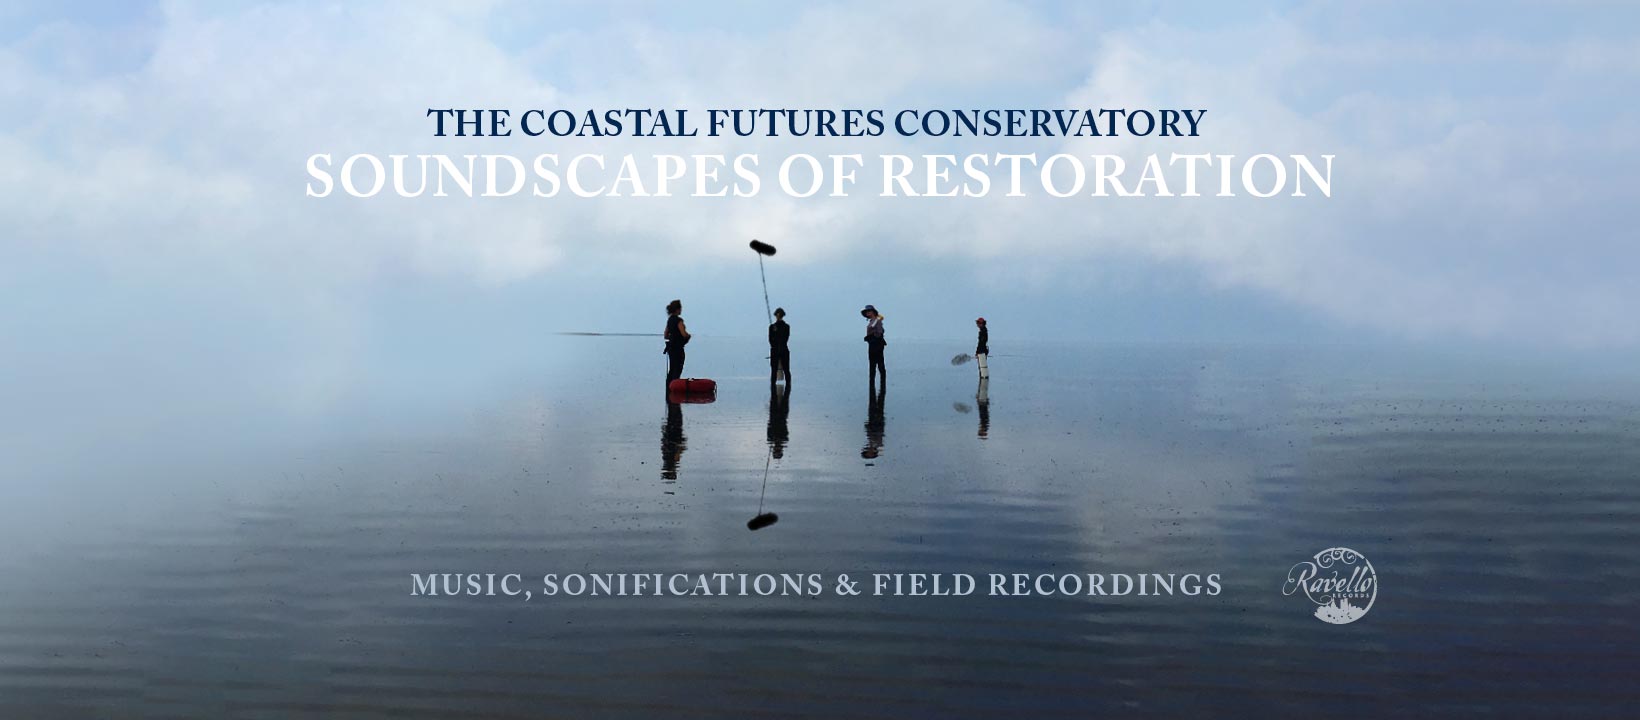 Soundscapes of Restoration   Ravello Records